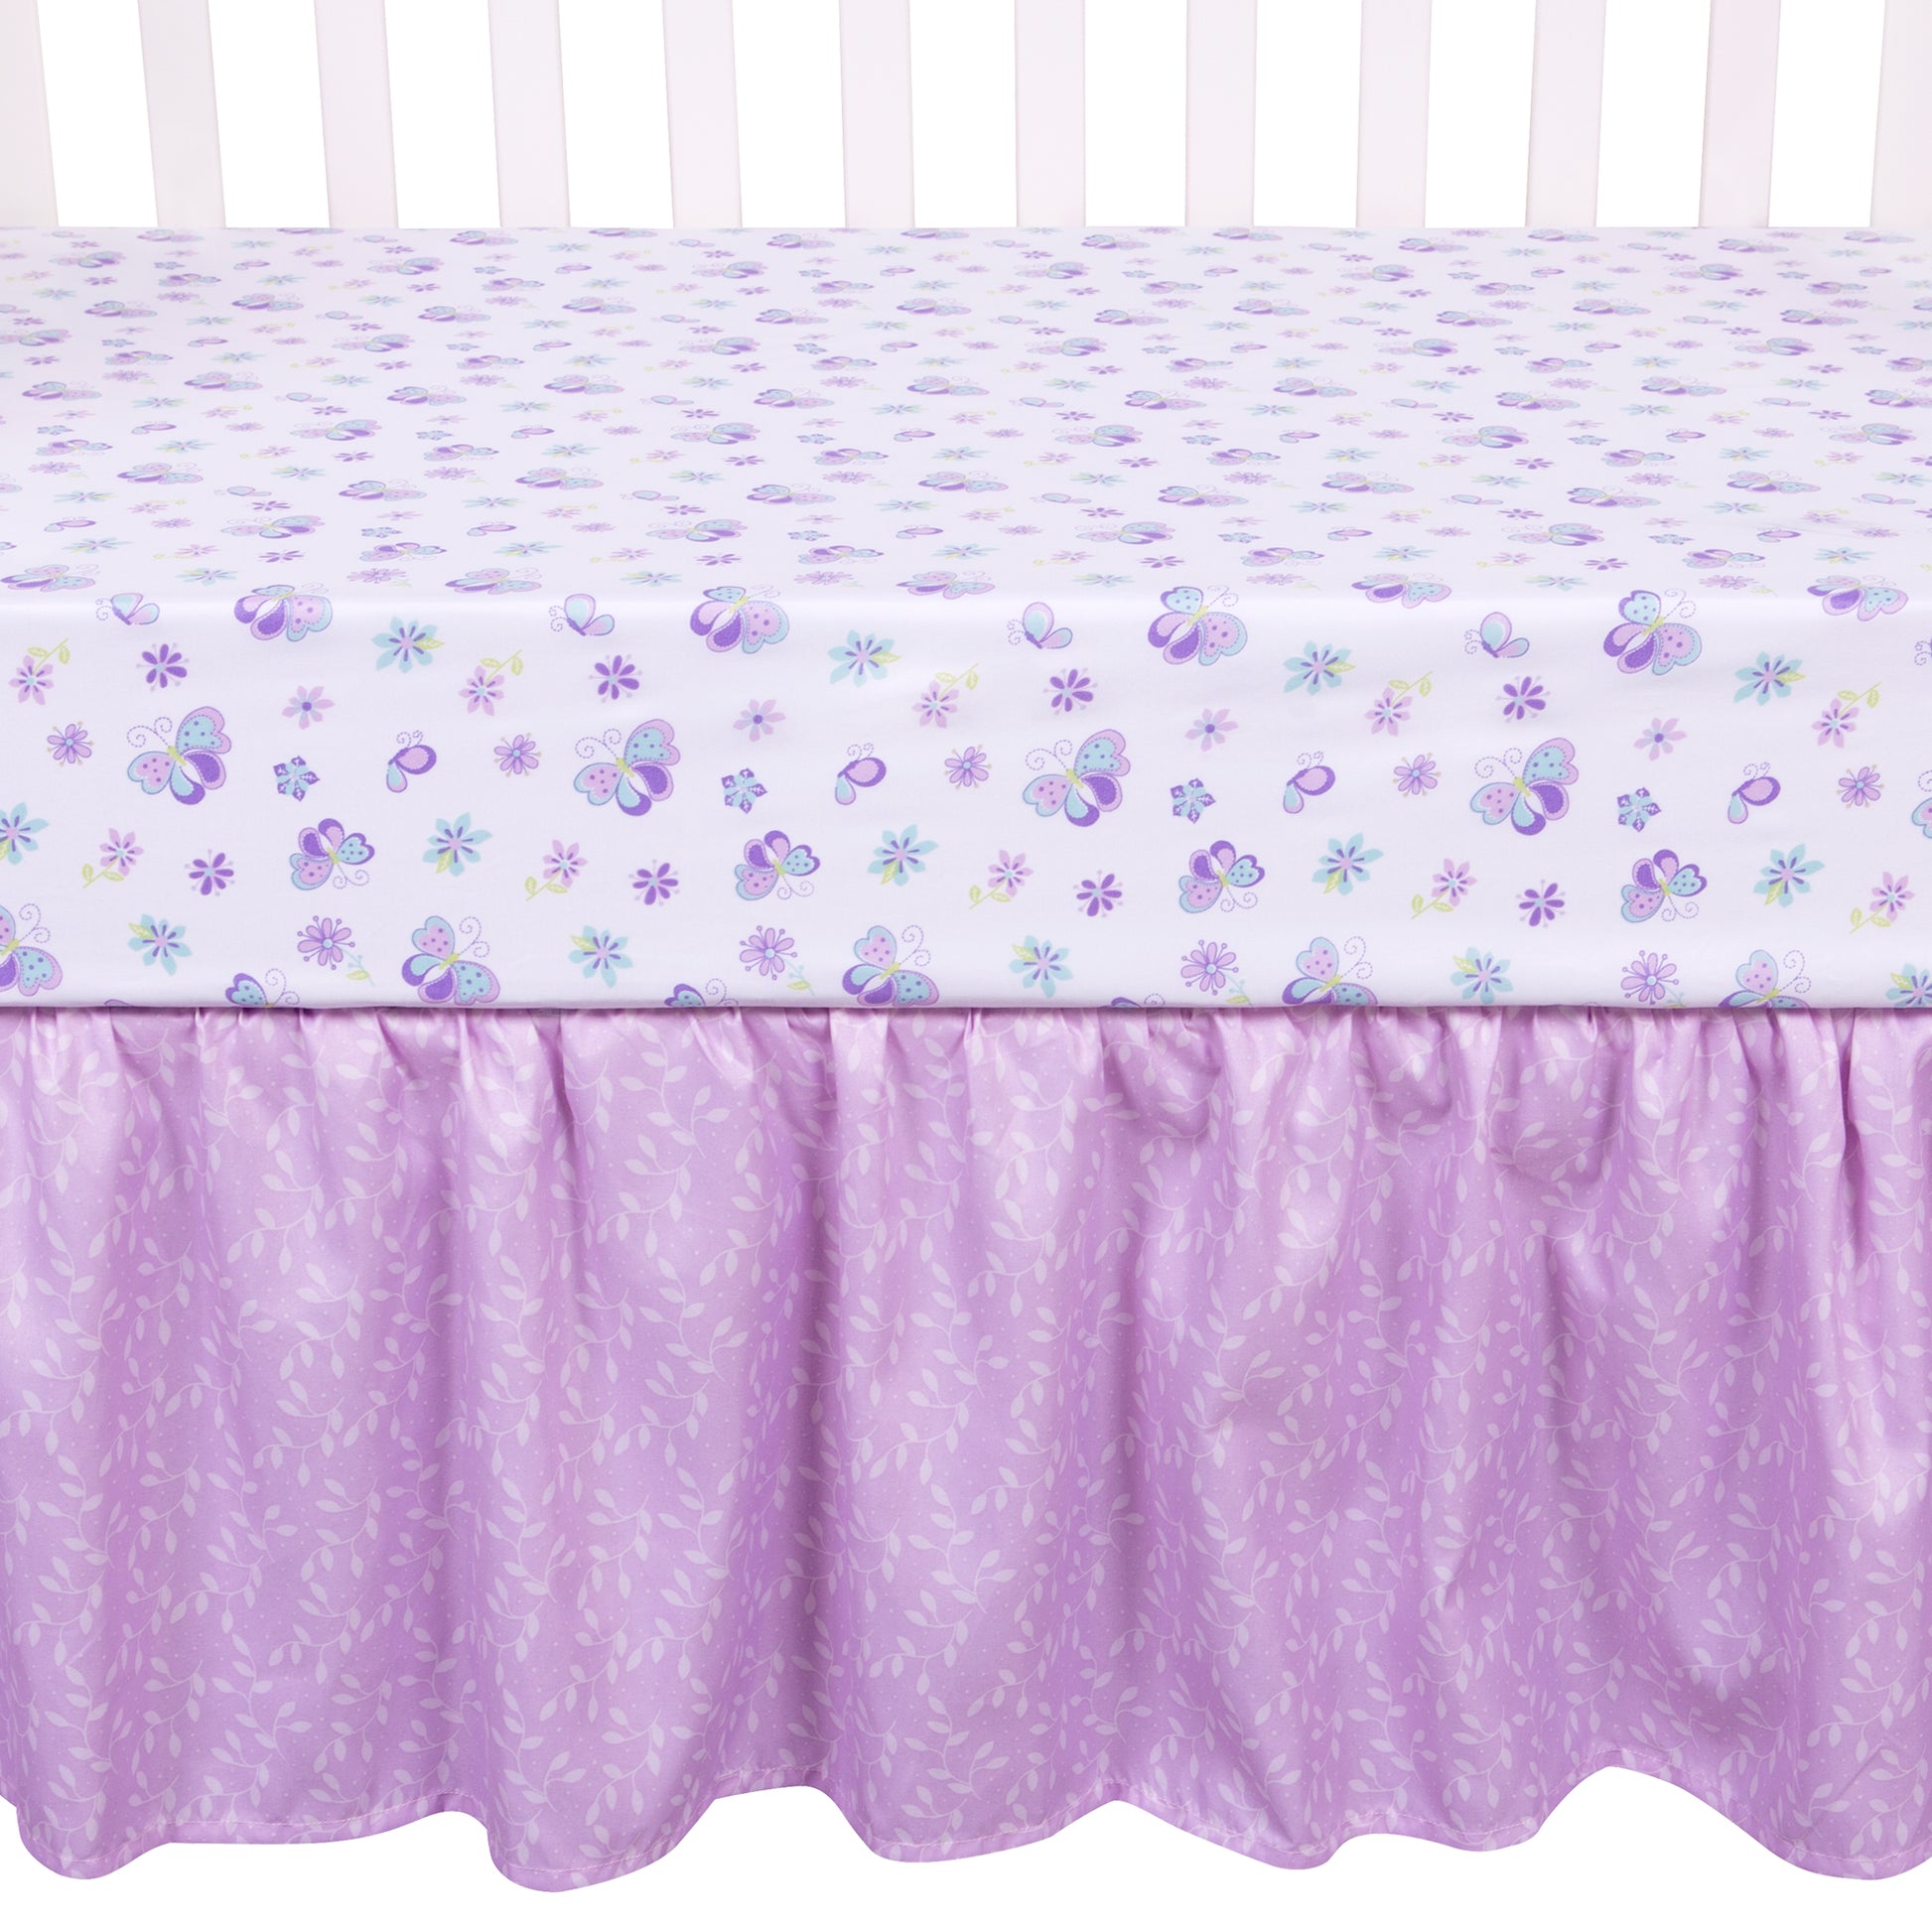  Butterfly Meadow Crib Bedding Set- Crib Sheet and Crib Skirt